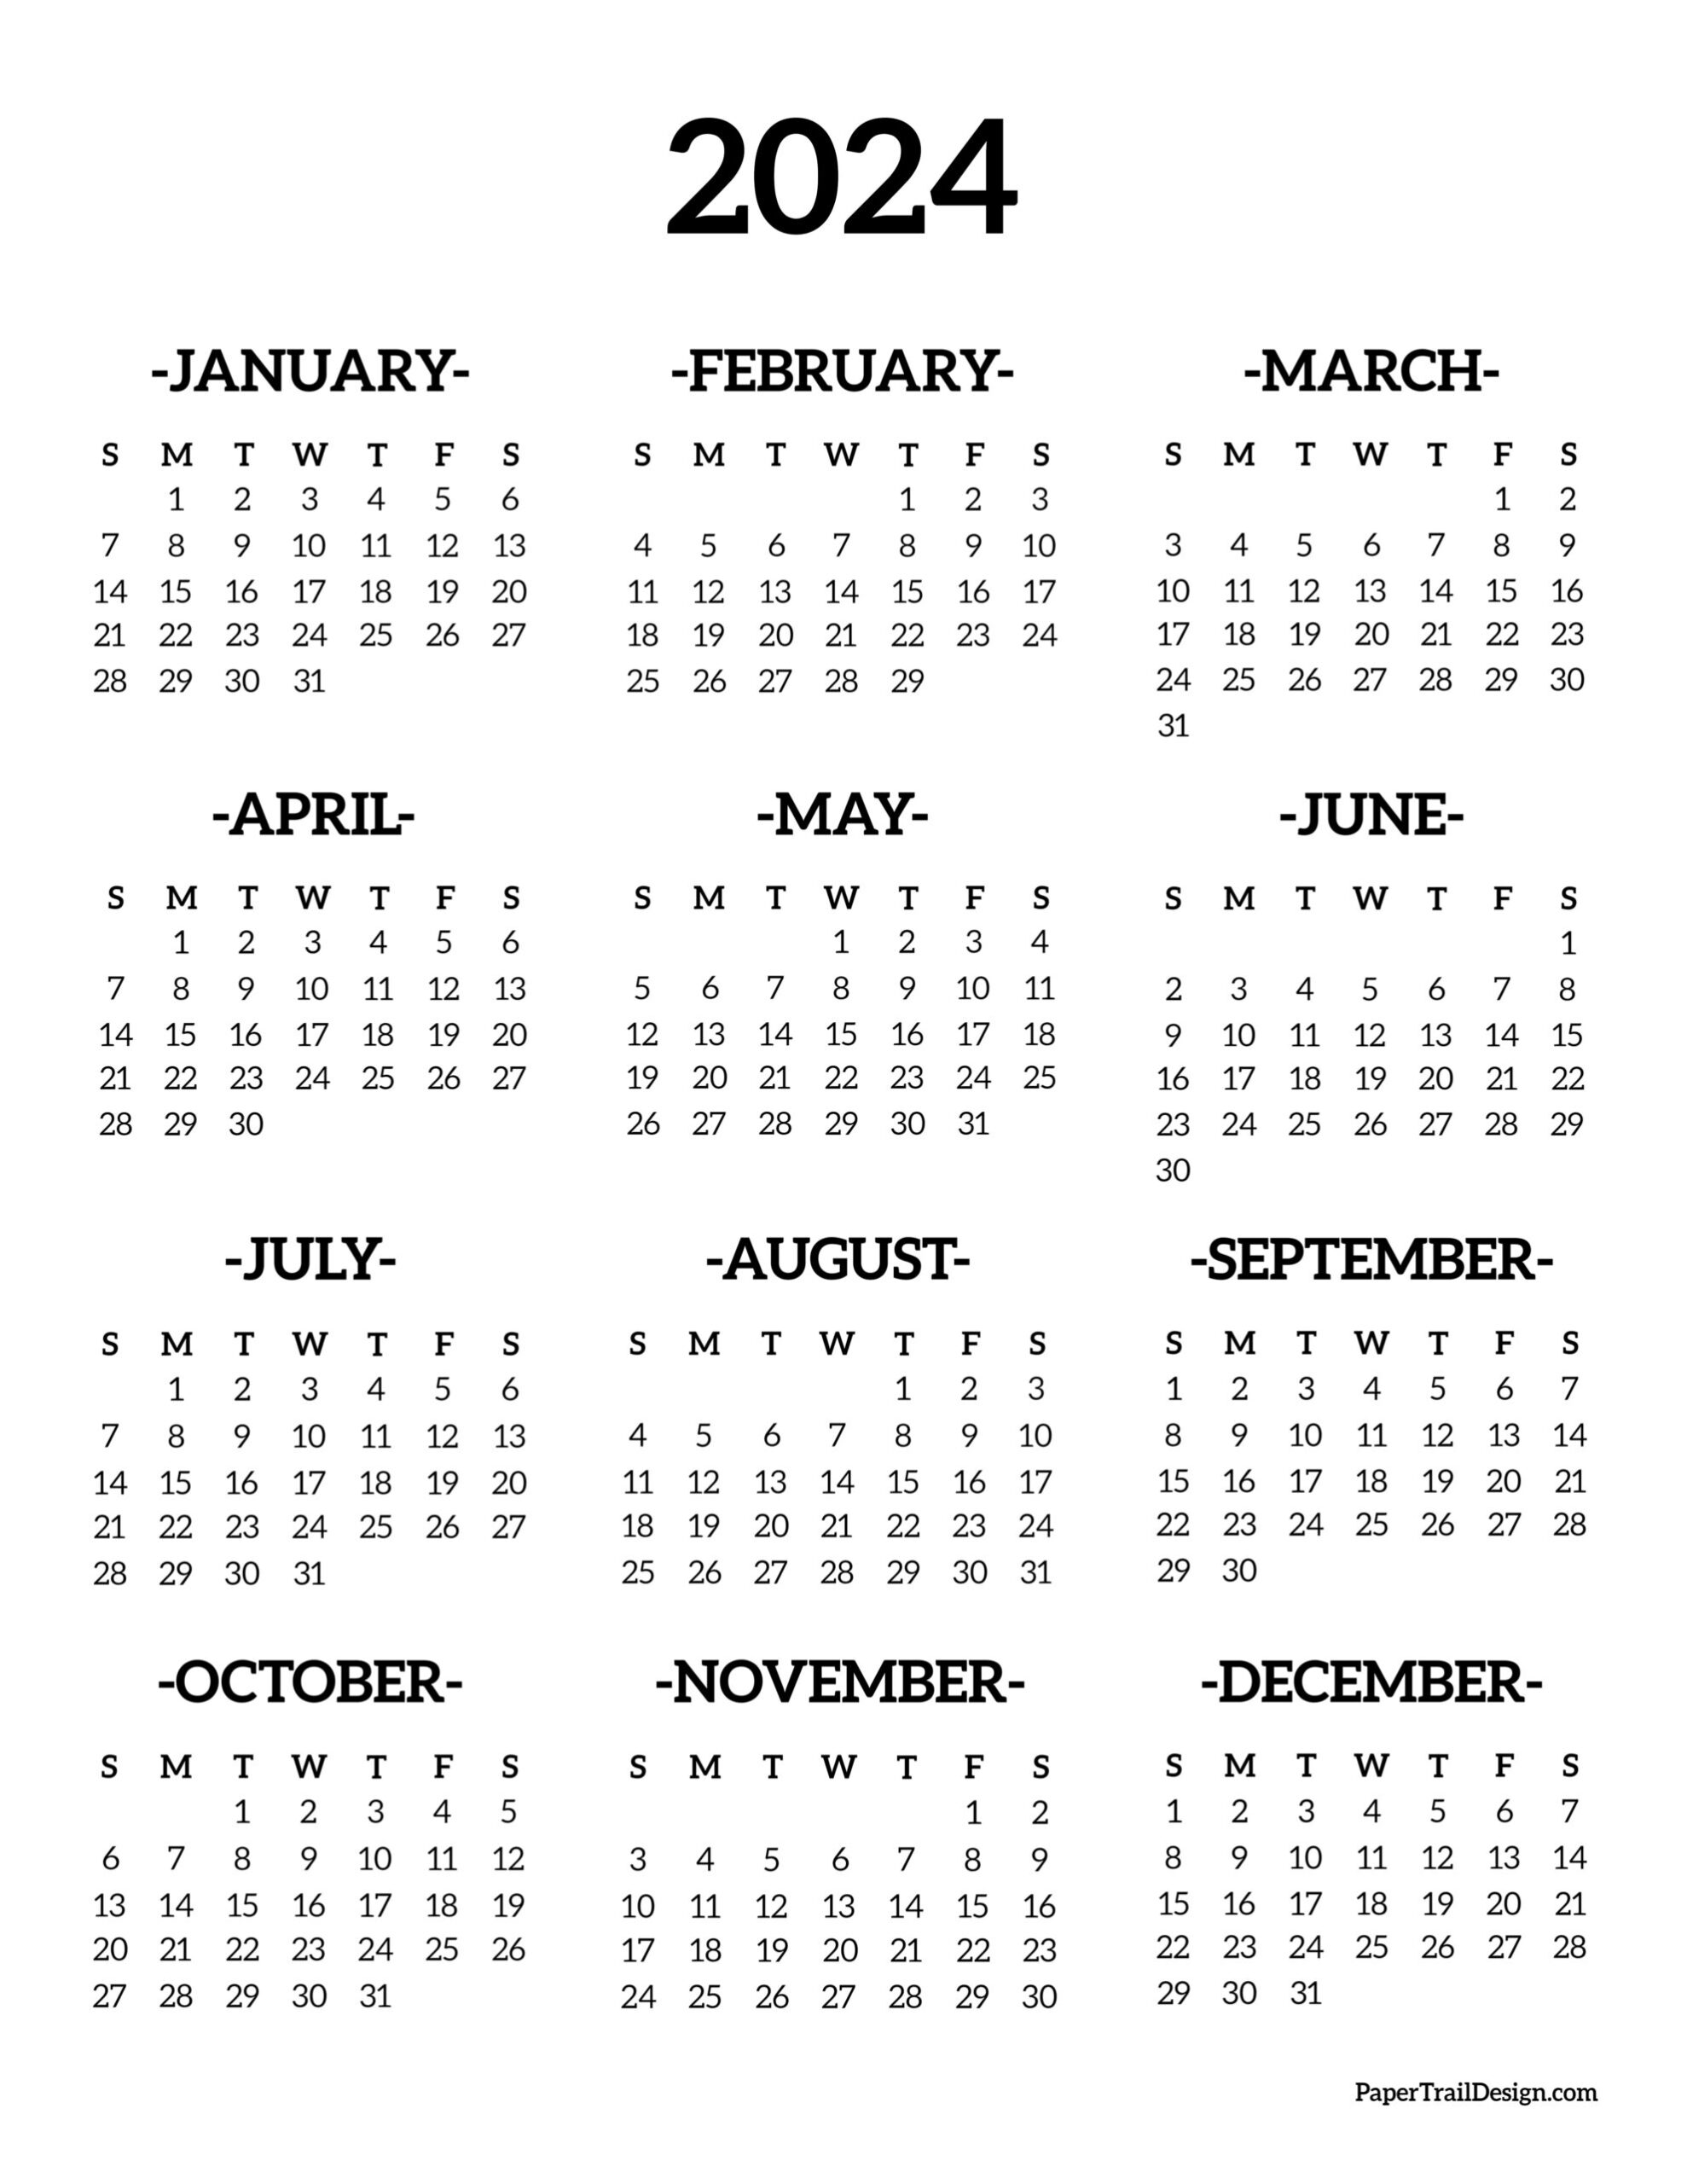 Calendar 2024 Printable One Page - Paper Trail Design for Calendar 2024 2024 Printable